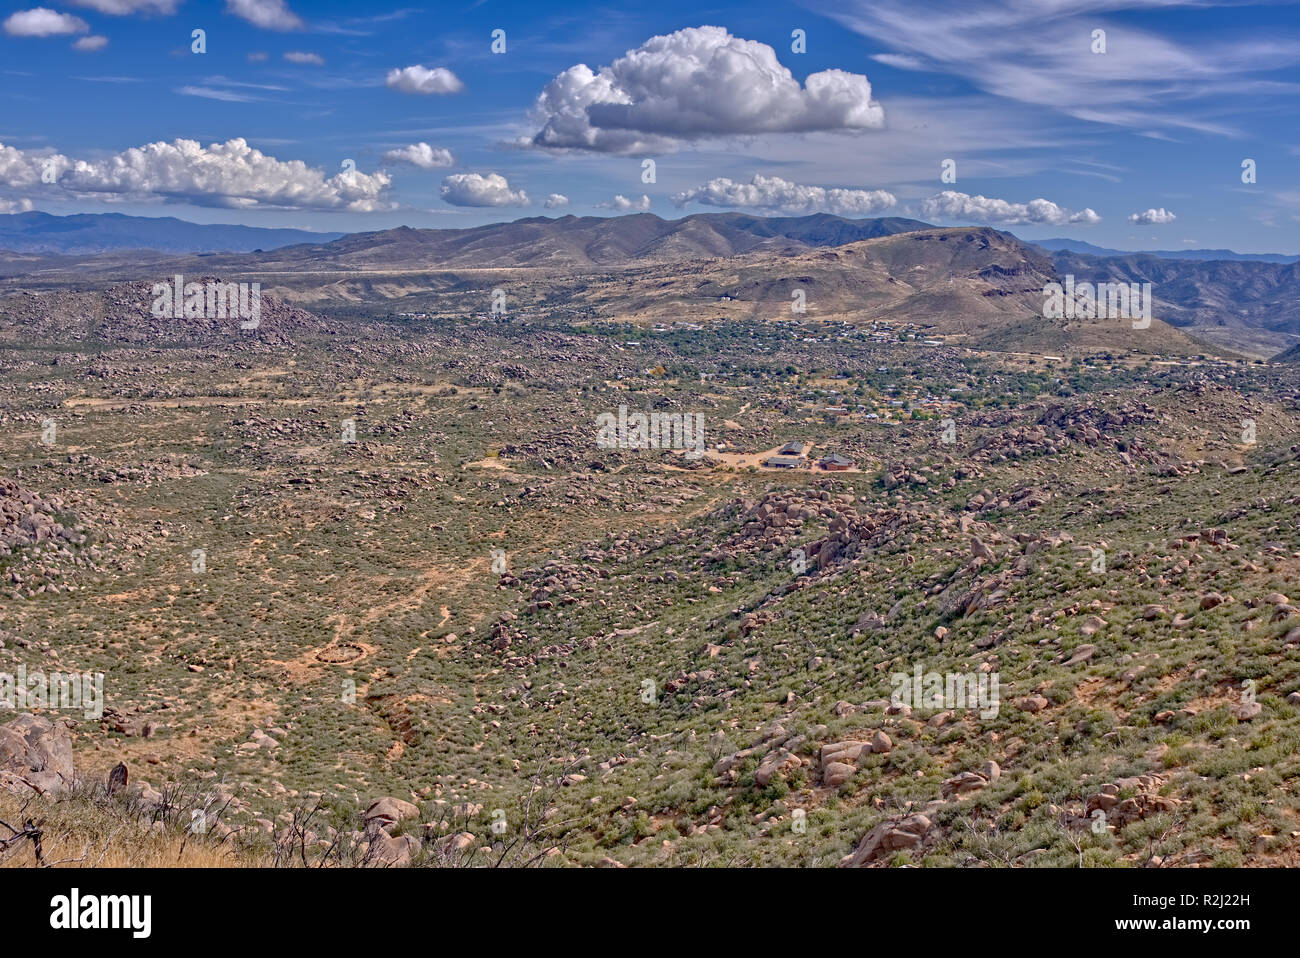 Aerial view of Granite Mountain Hotshots Memorial, Arizona, United States Stock Photo